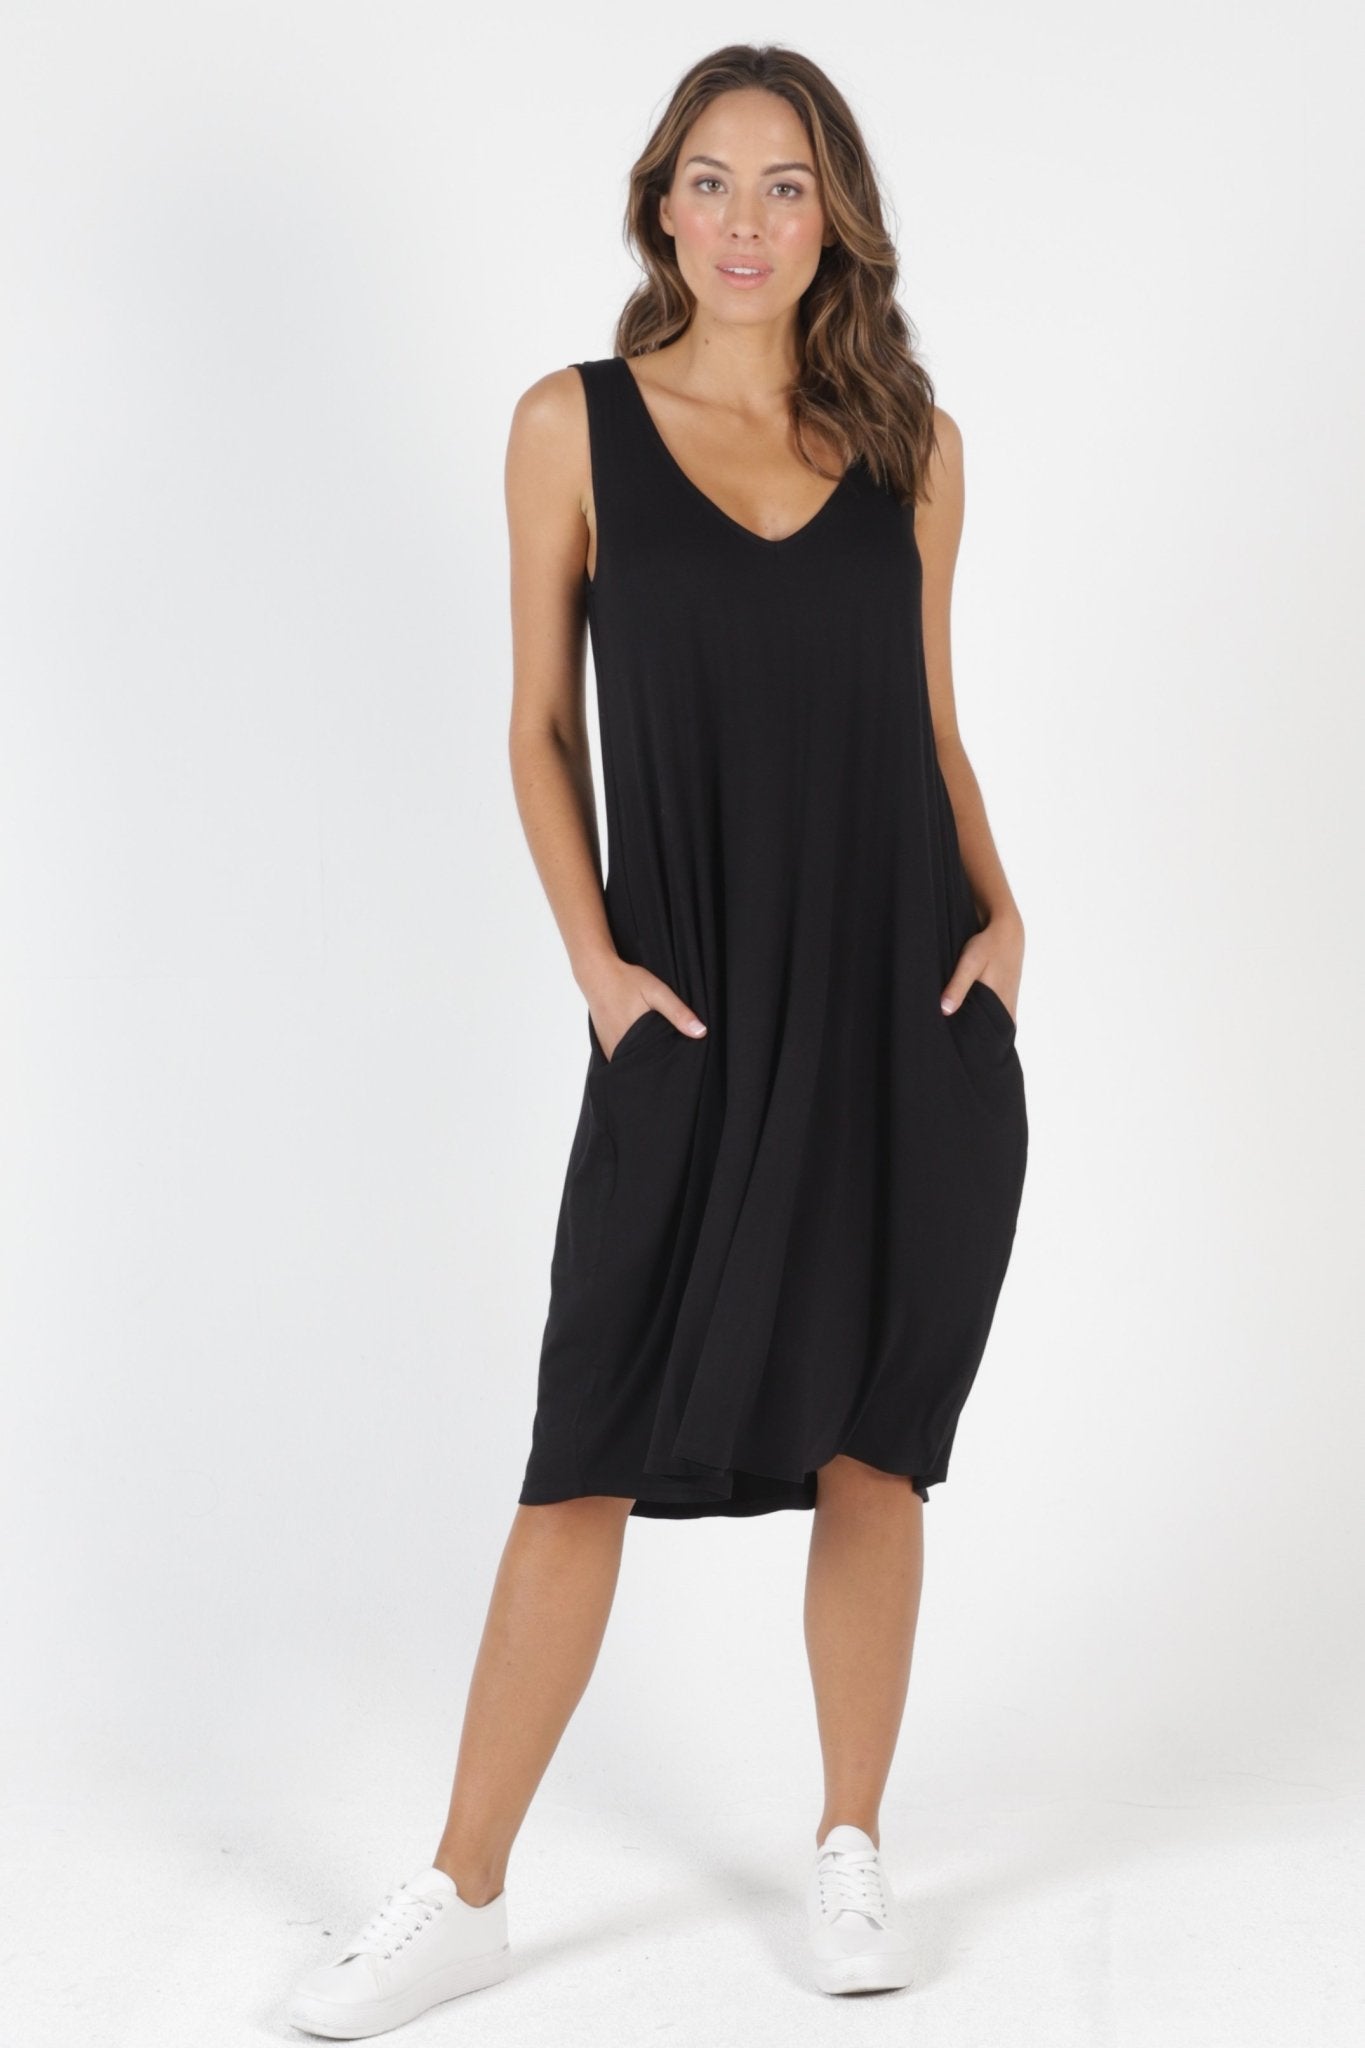 Betty Basics Oman Dress in Black - Hey Sara